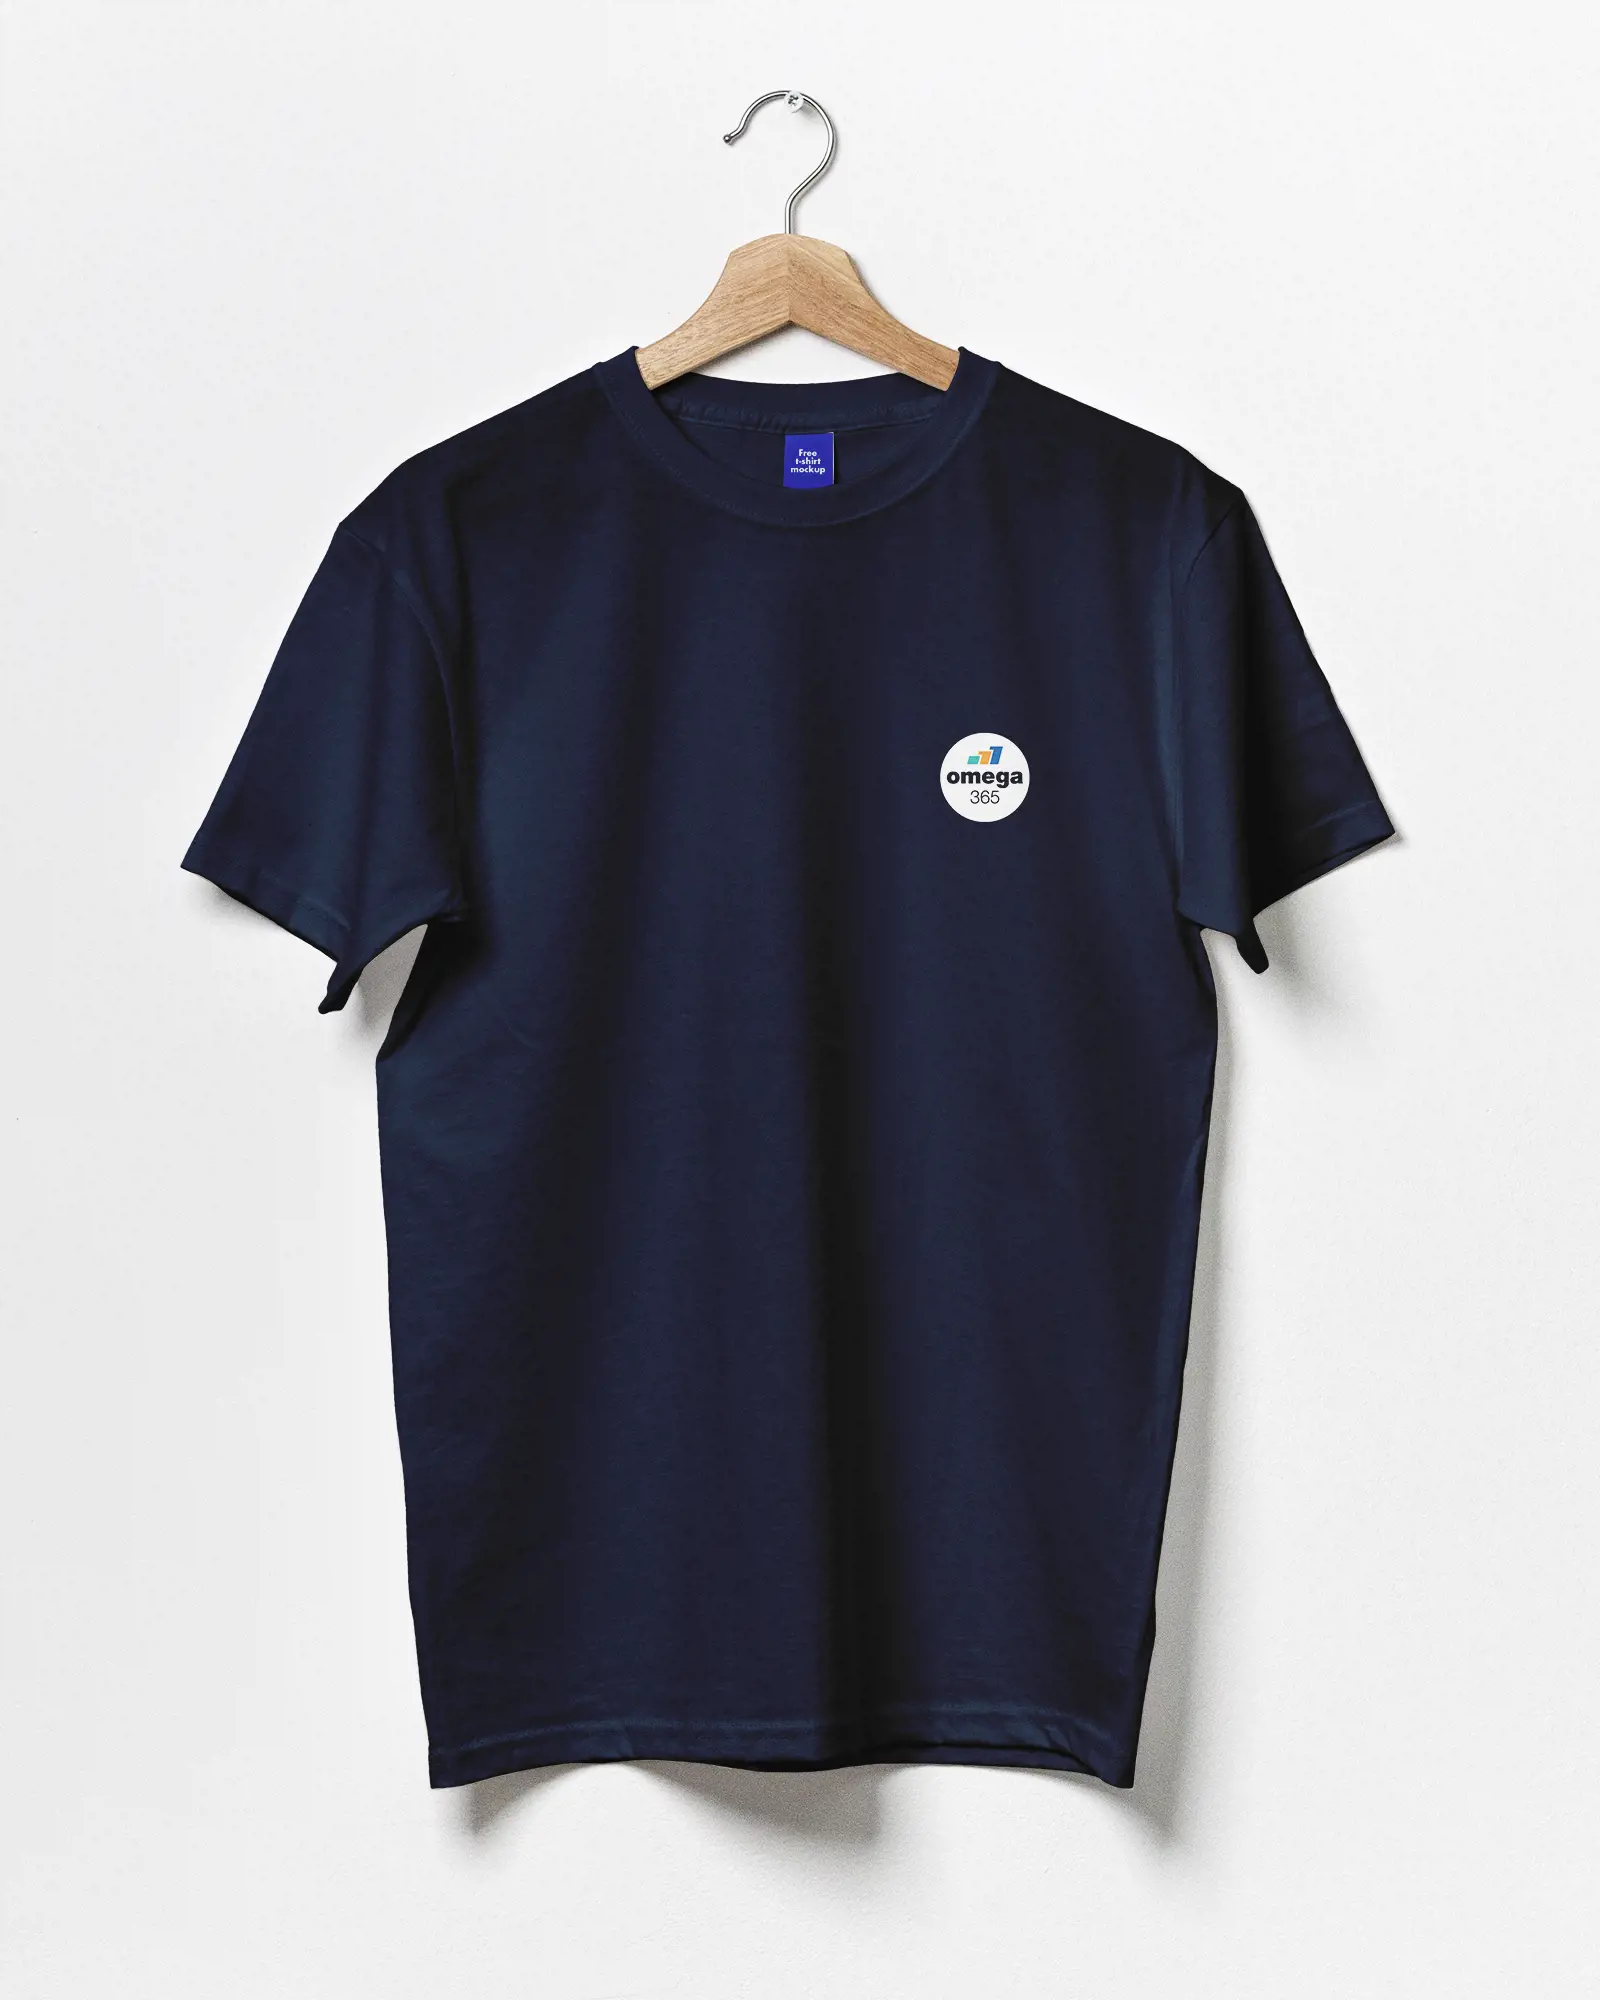 Dark blue T-shirt with Omega 365's logo.